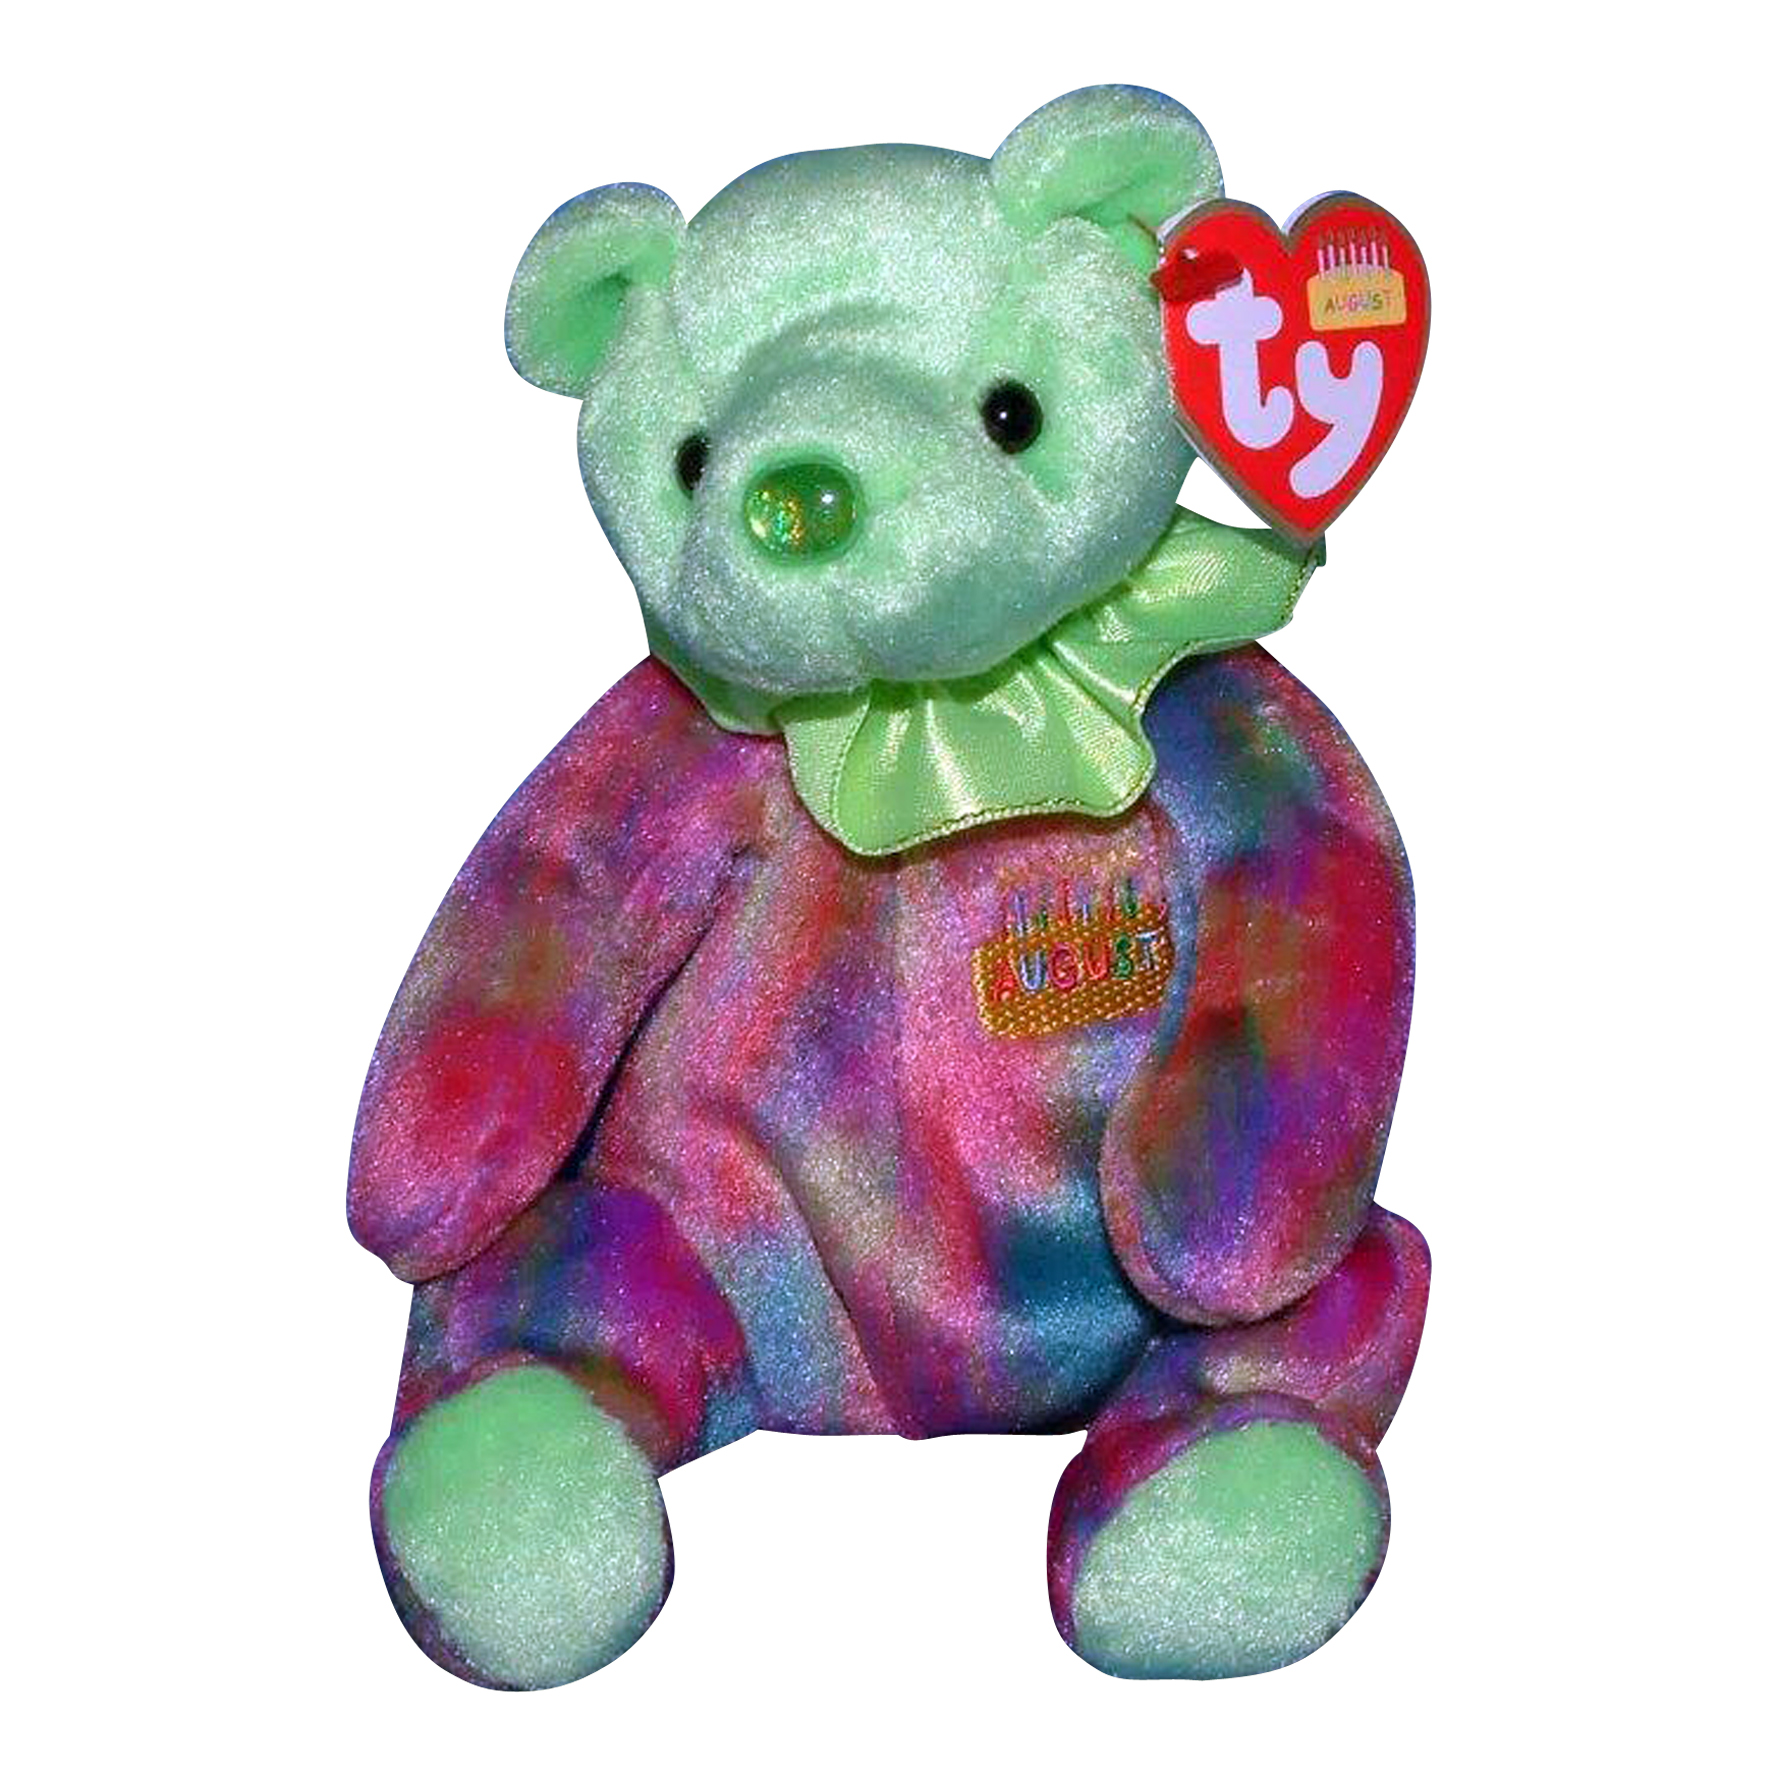 Ty Beanie Baby August - MWMT, Bear Birthday 8421043712 | eBay